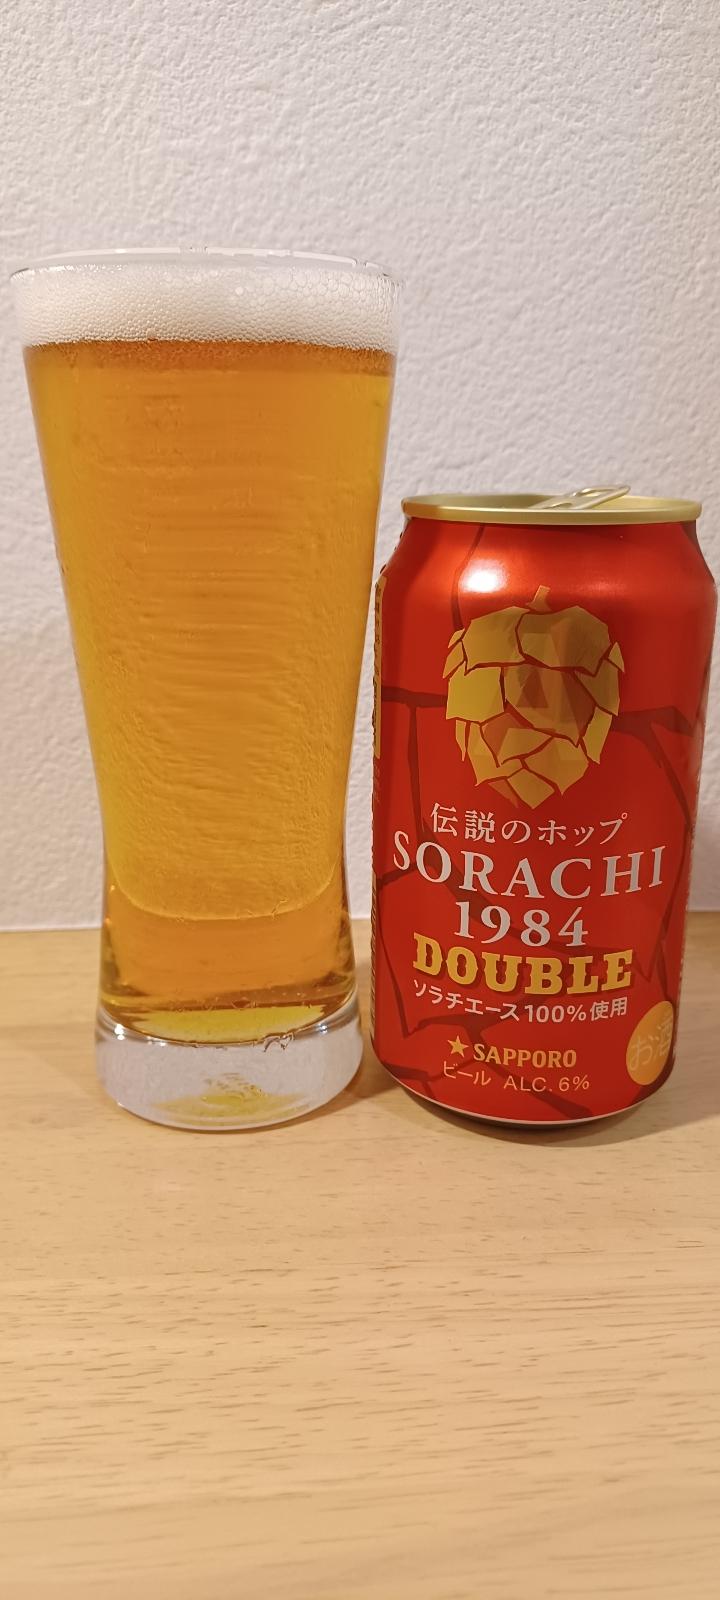 Sorachi 1984 Double